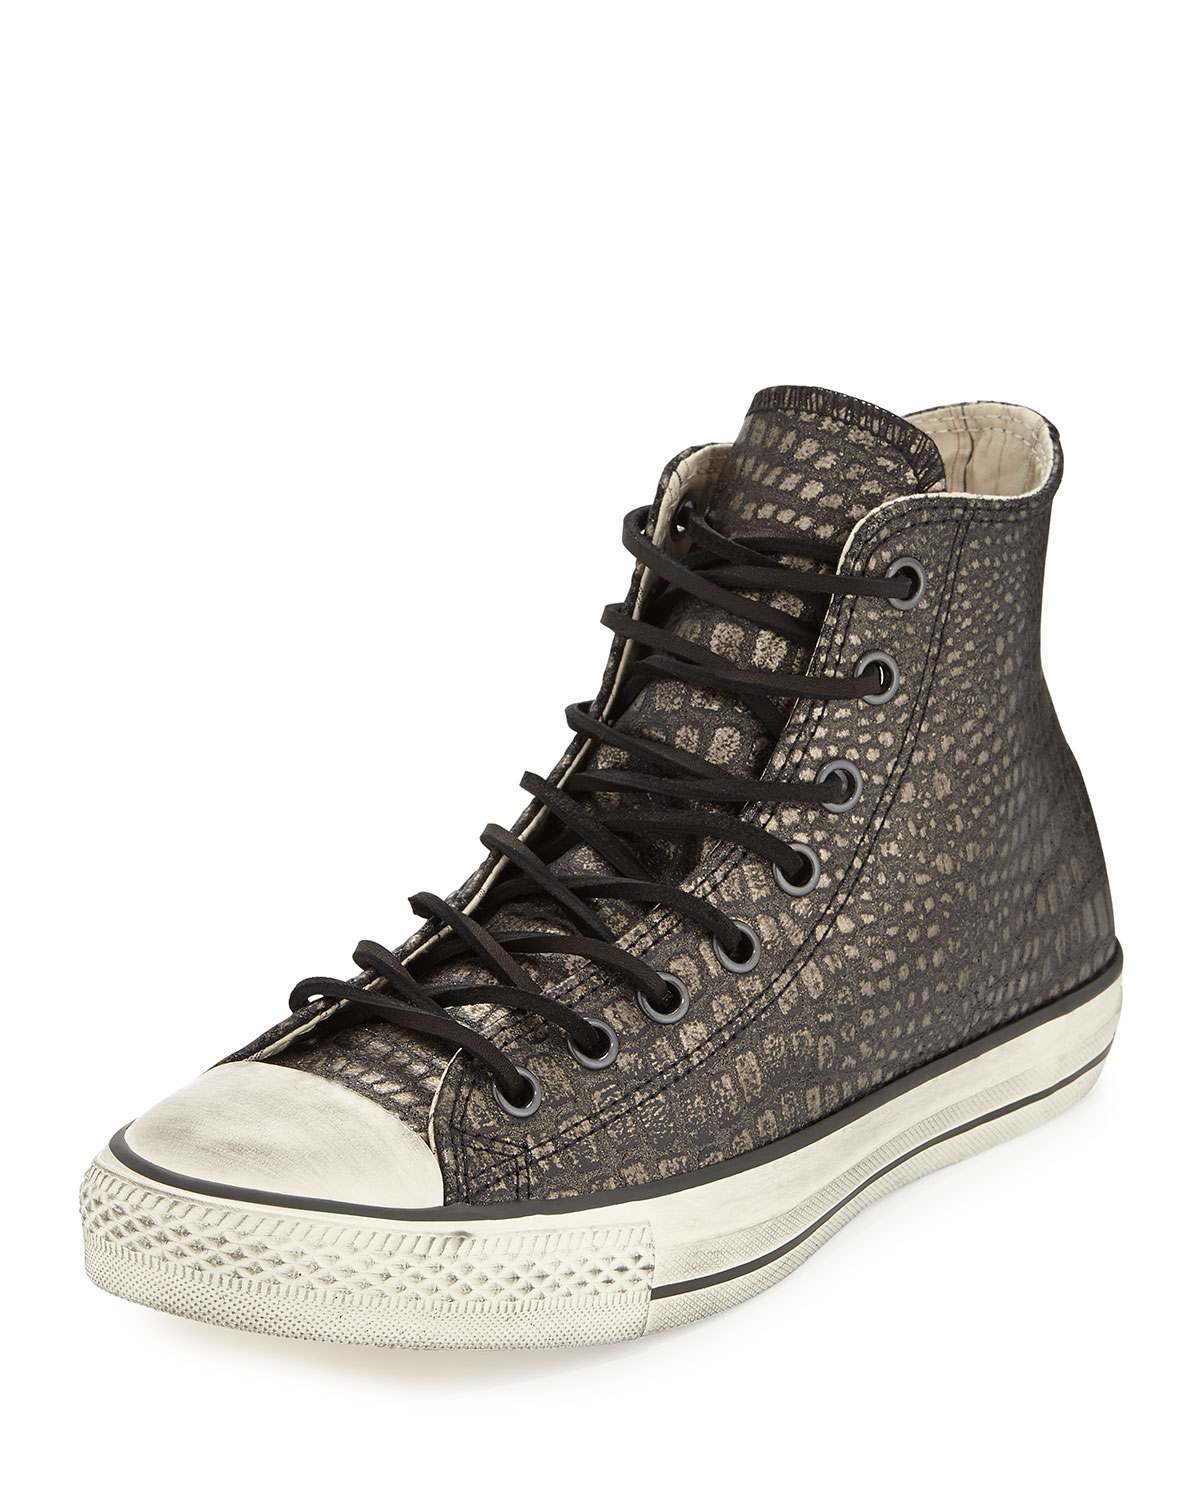 Converse John Varvatos Metallic Reptile-Embossed High-Top Sneaker in ...